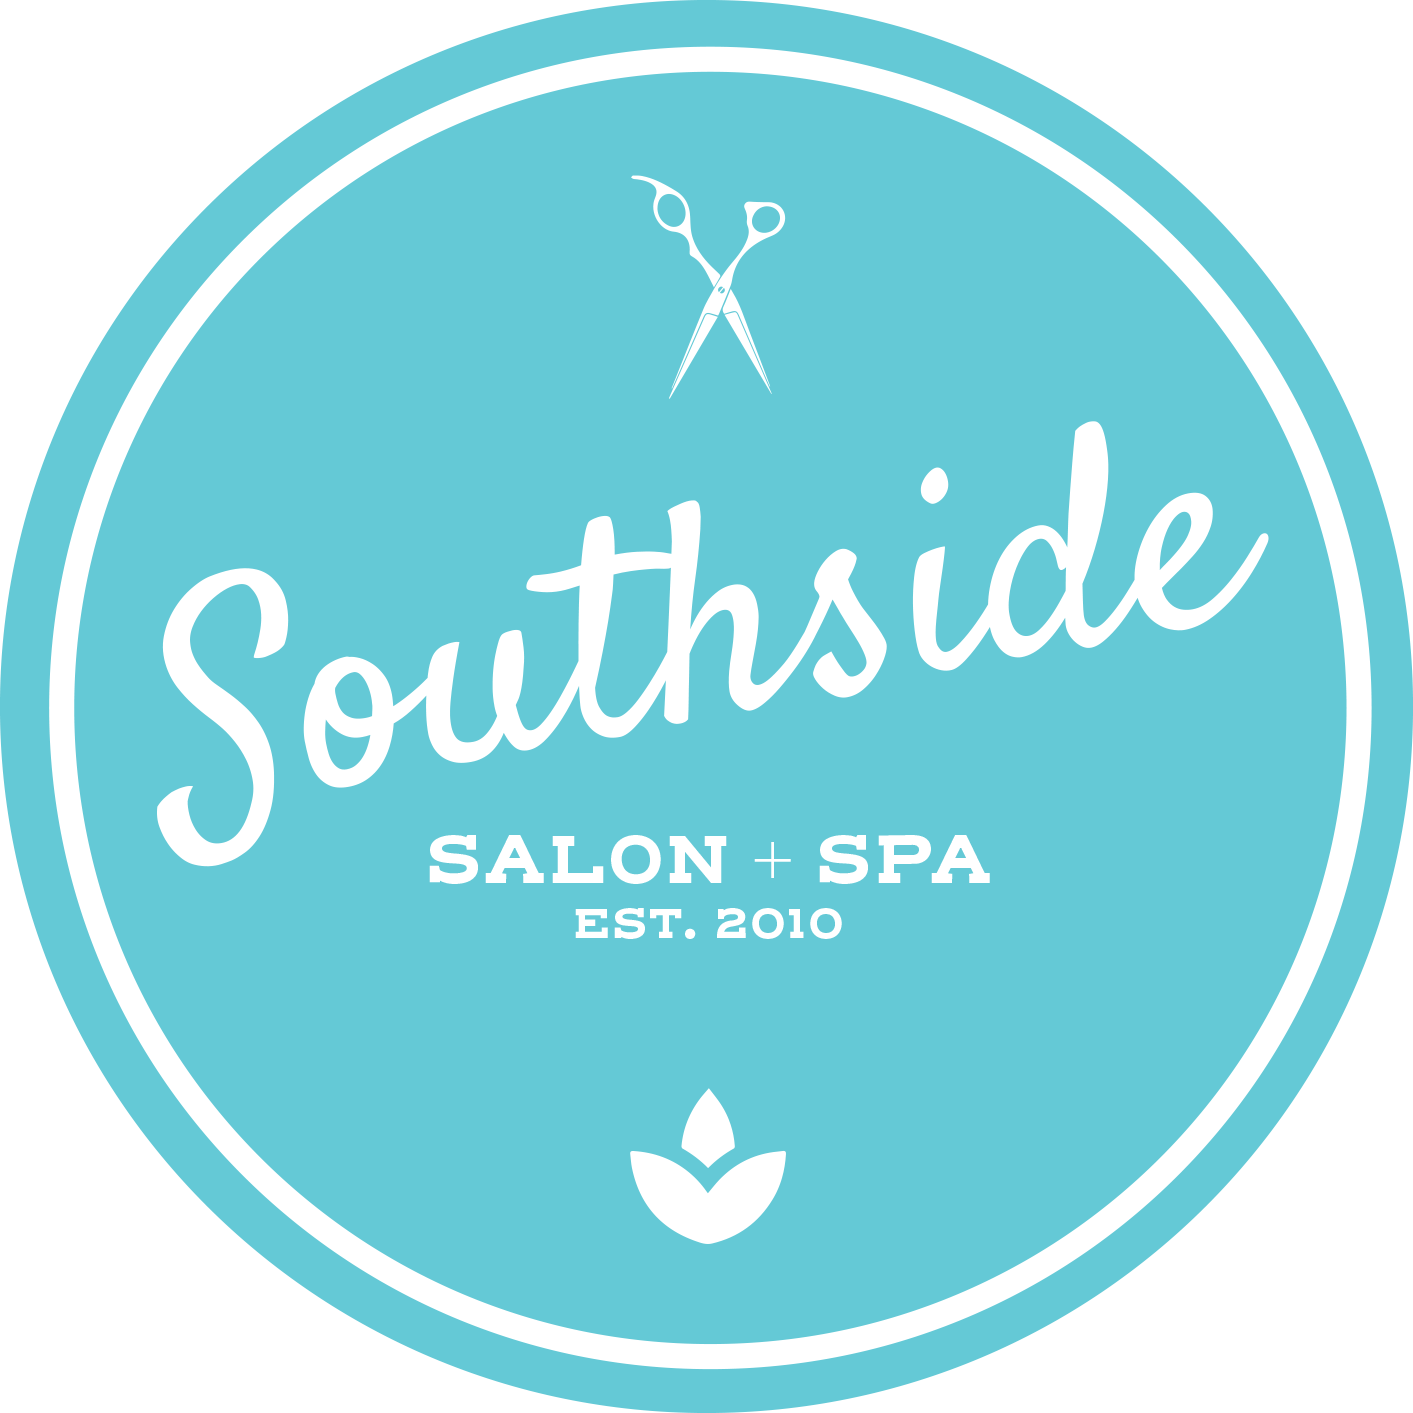 Southside Salon + Spa